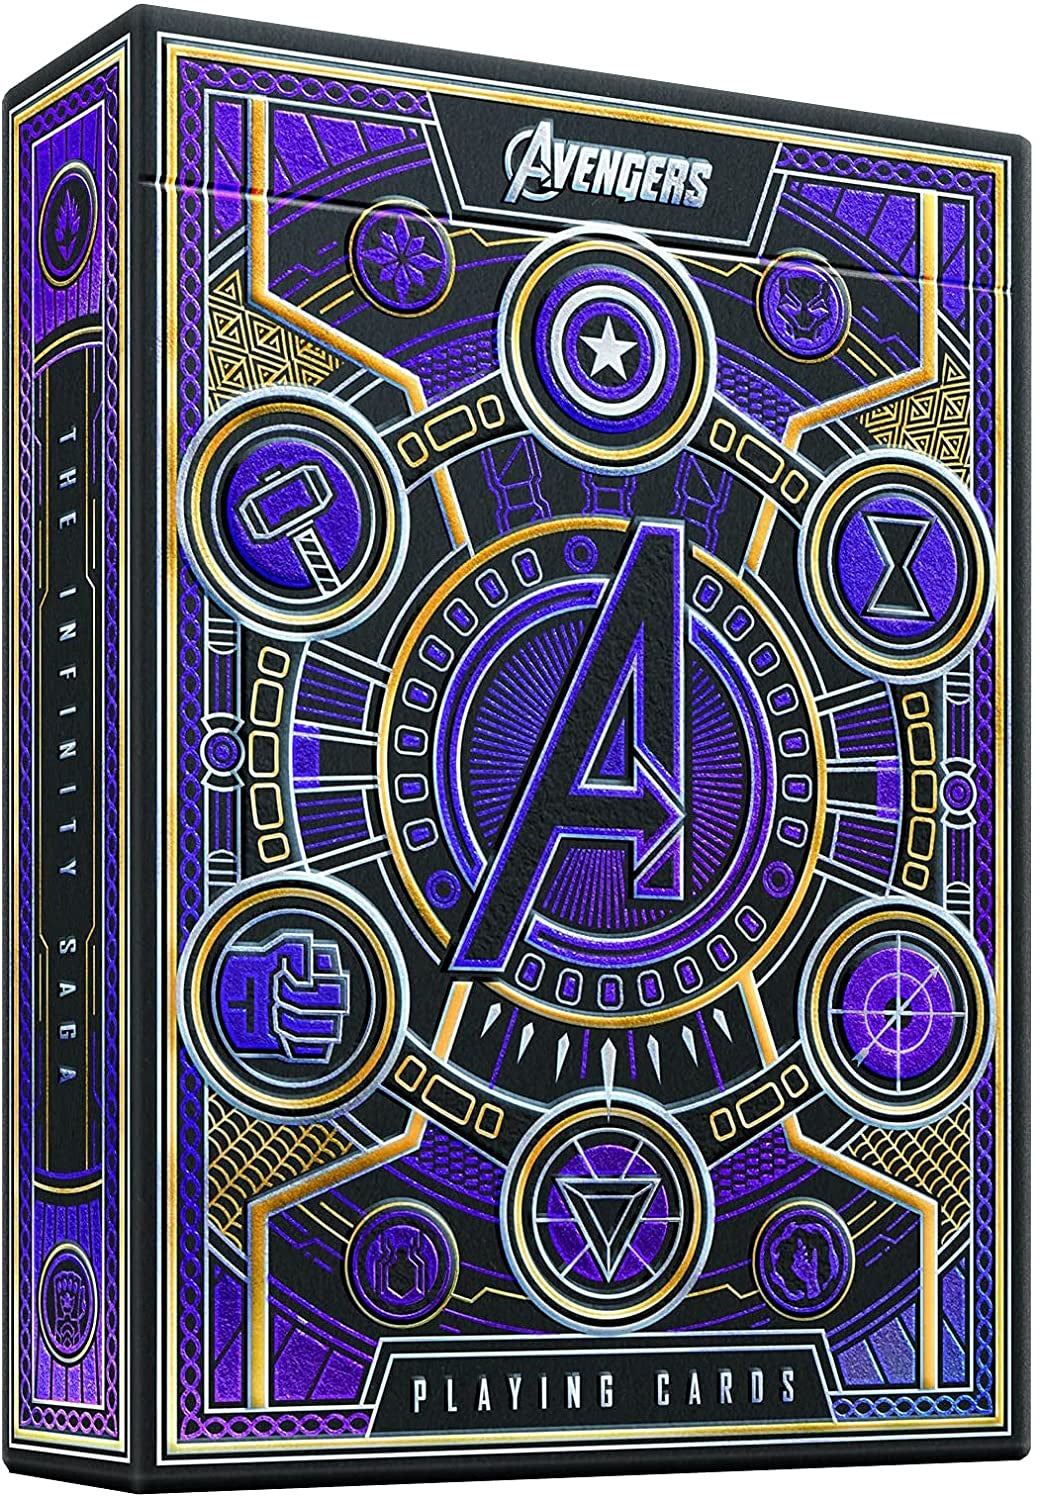 Theory 11 Avengers Infinity Saga Playing Cards